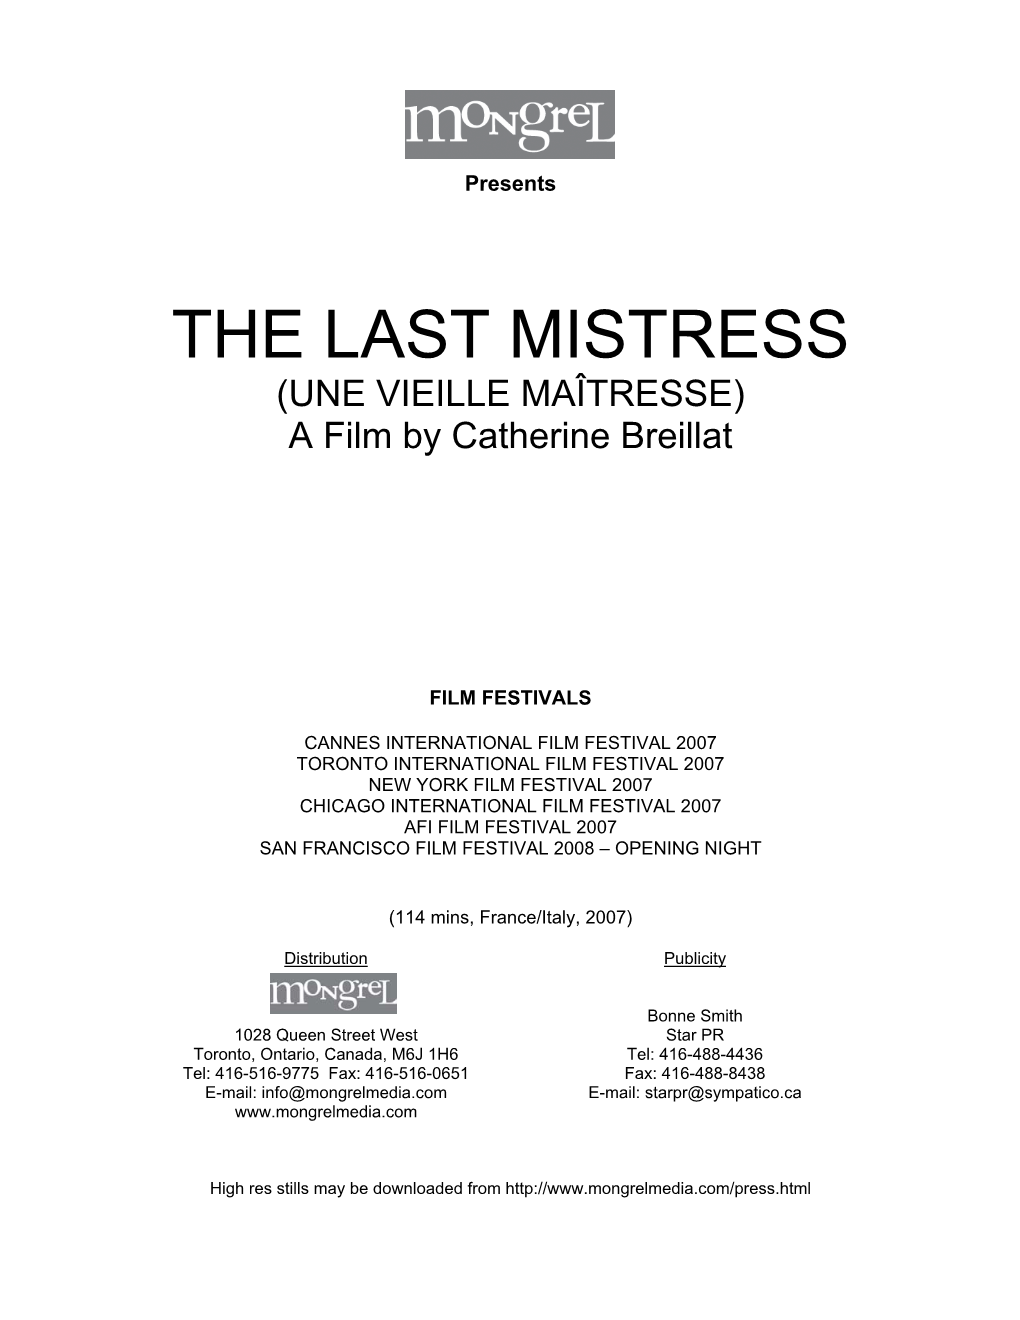 THE LAST MISTRESS (UNE VIEILLE MAÎTRESSE) a Film by Catherine Breillat